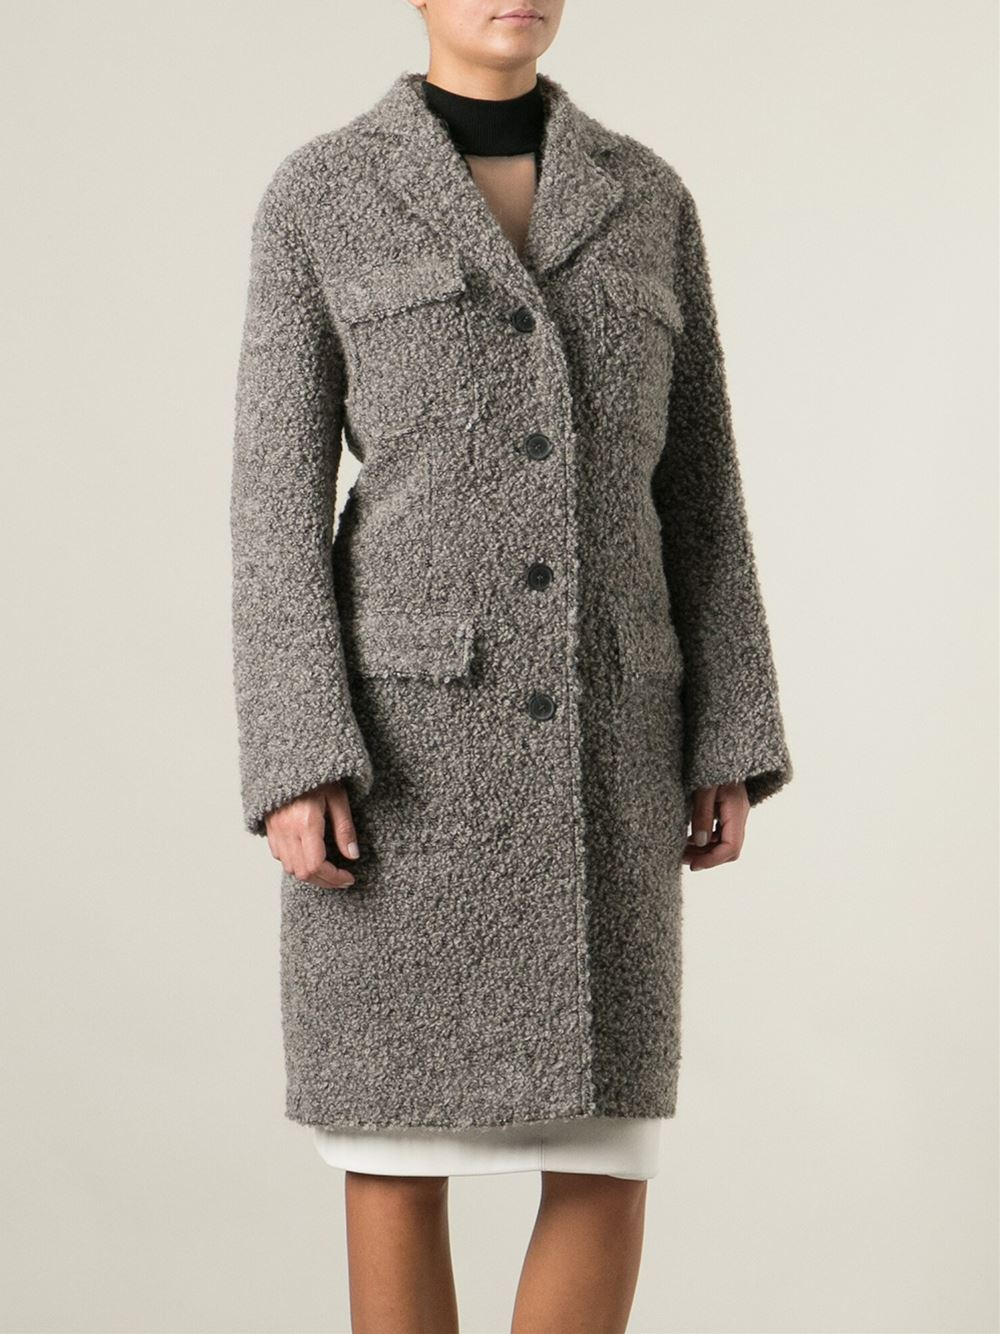 Acne Studios 'Tessa' Bouclé Jacket in Grey (Gray) - Lyst